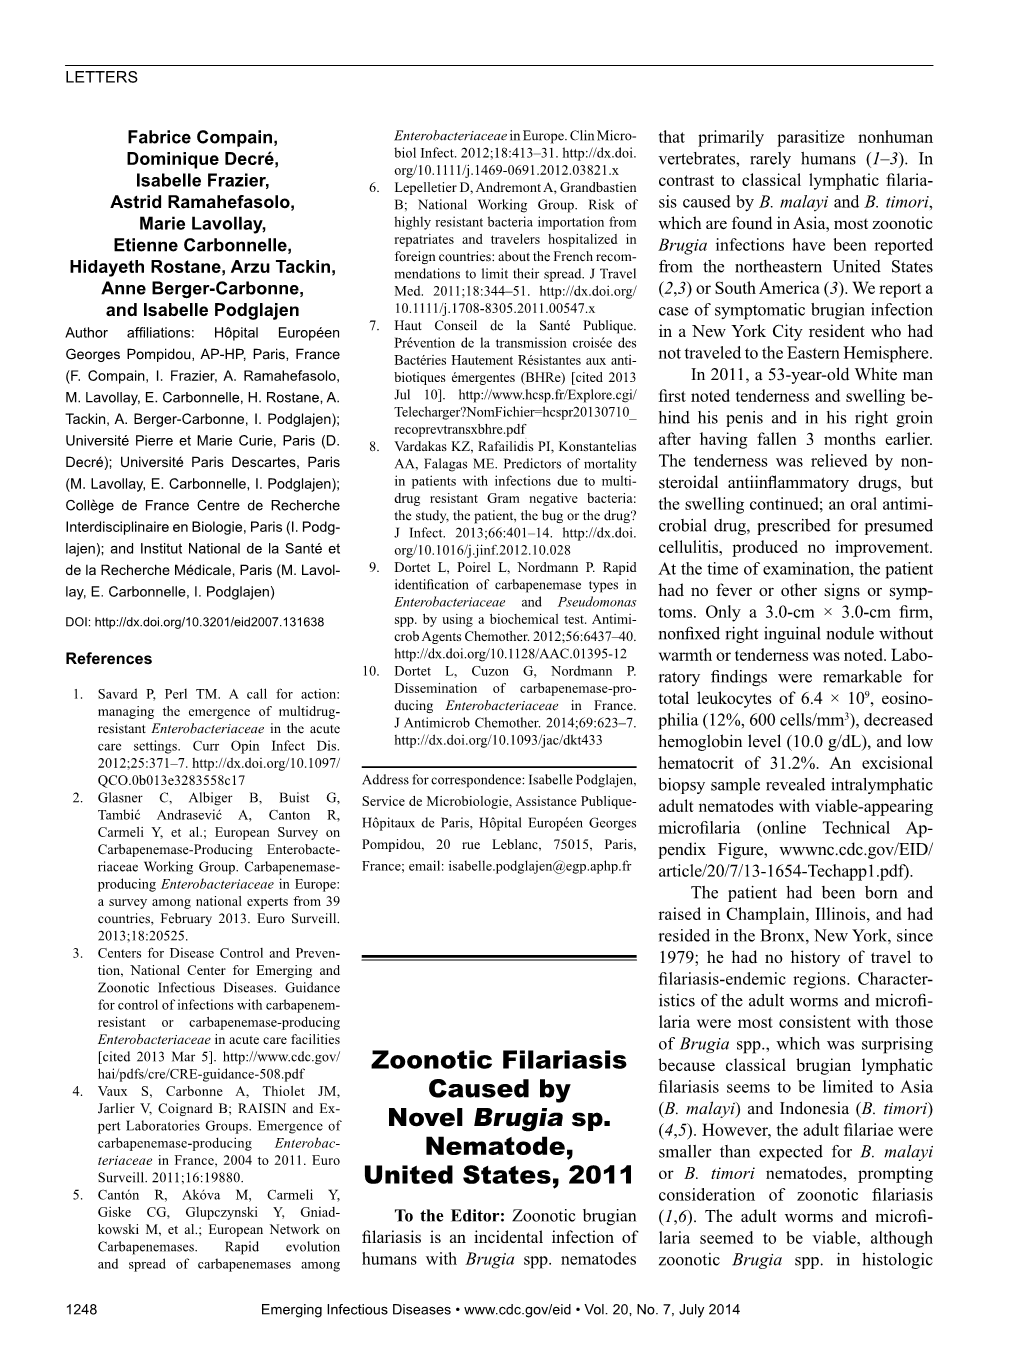 Zoonotic Filariasis Caused by Novel Brugia Sp. Nematode, United States